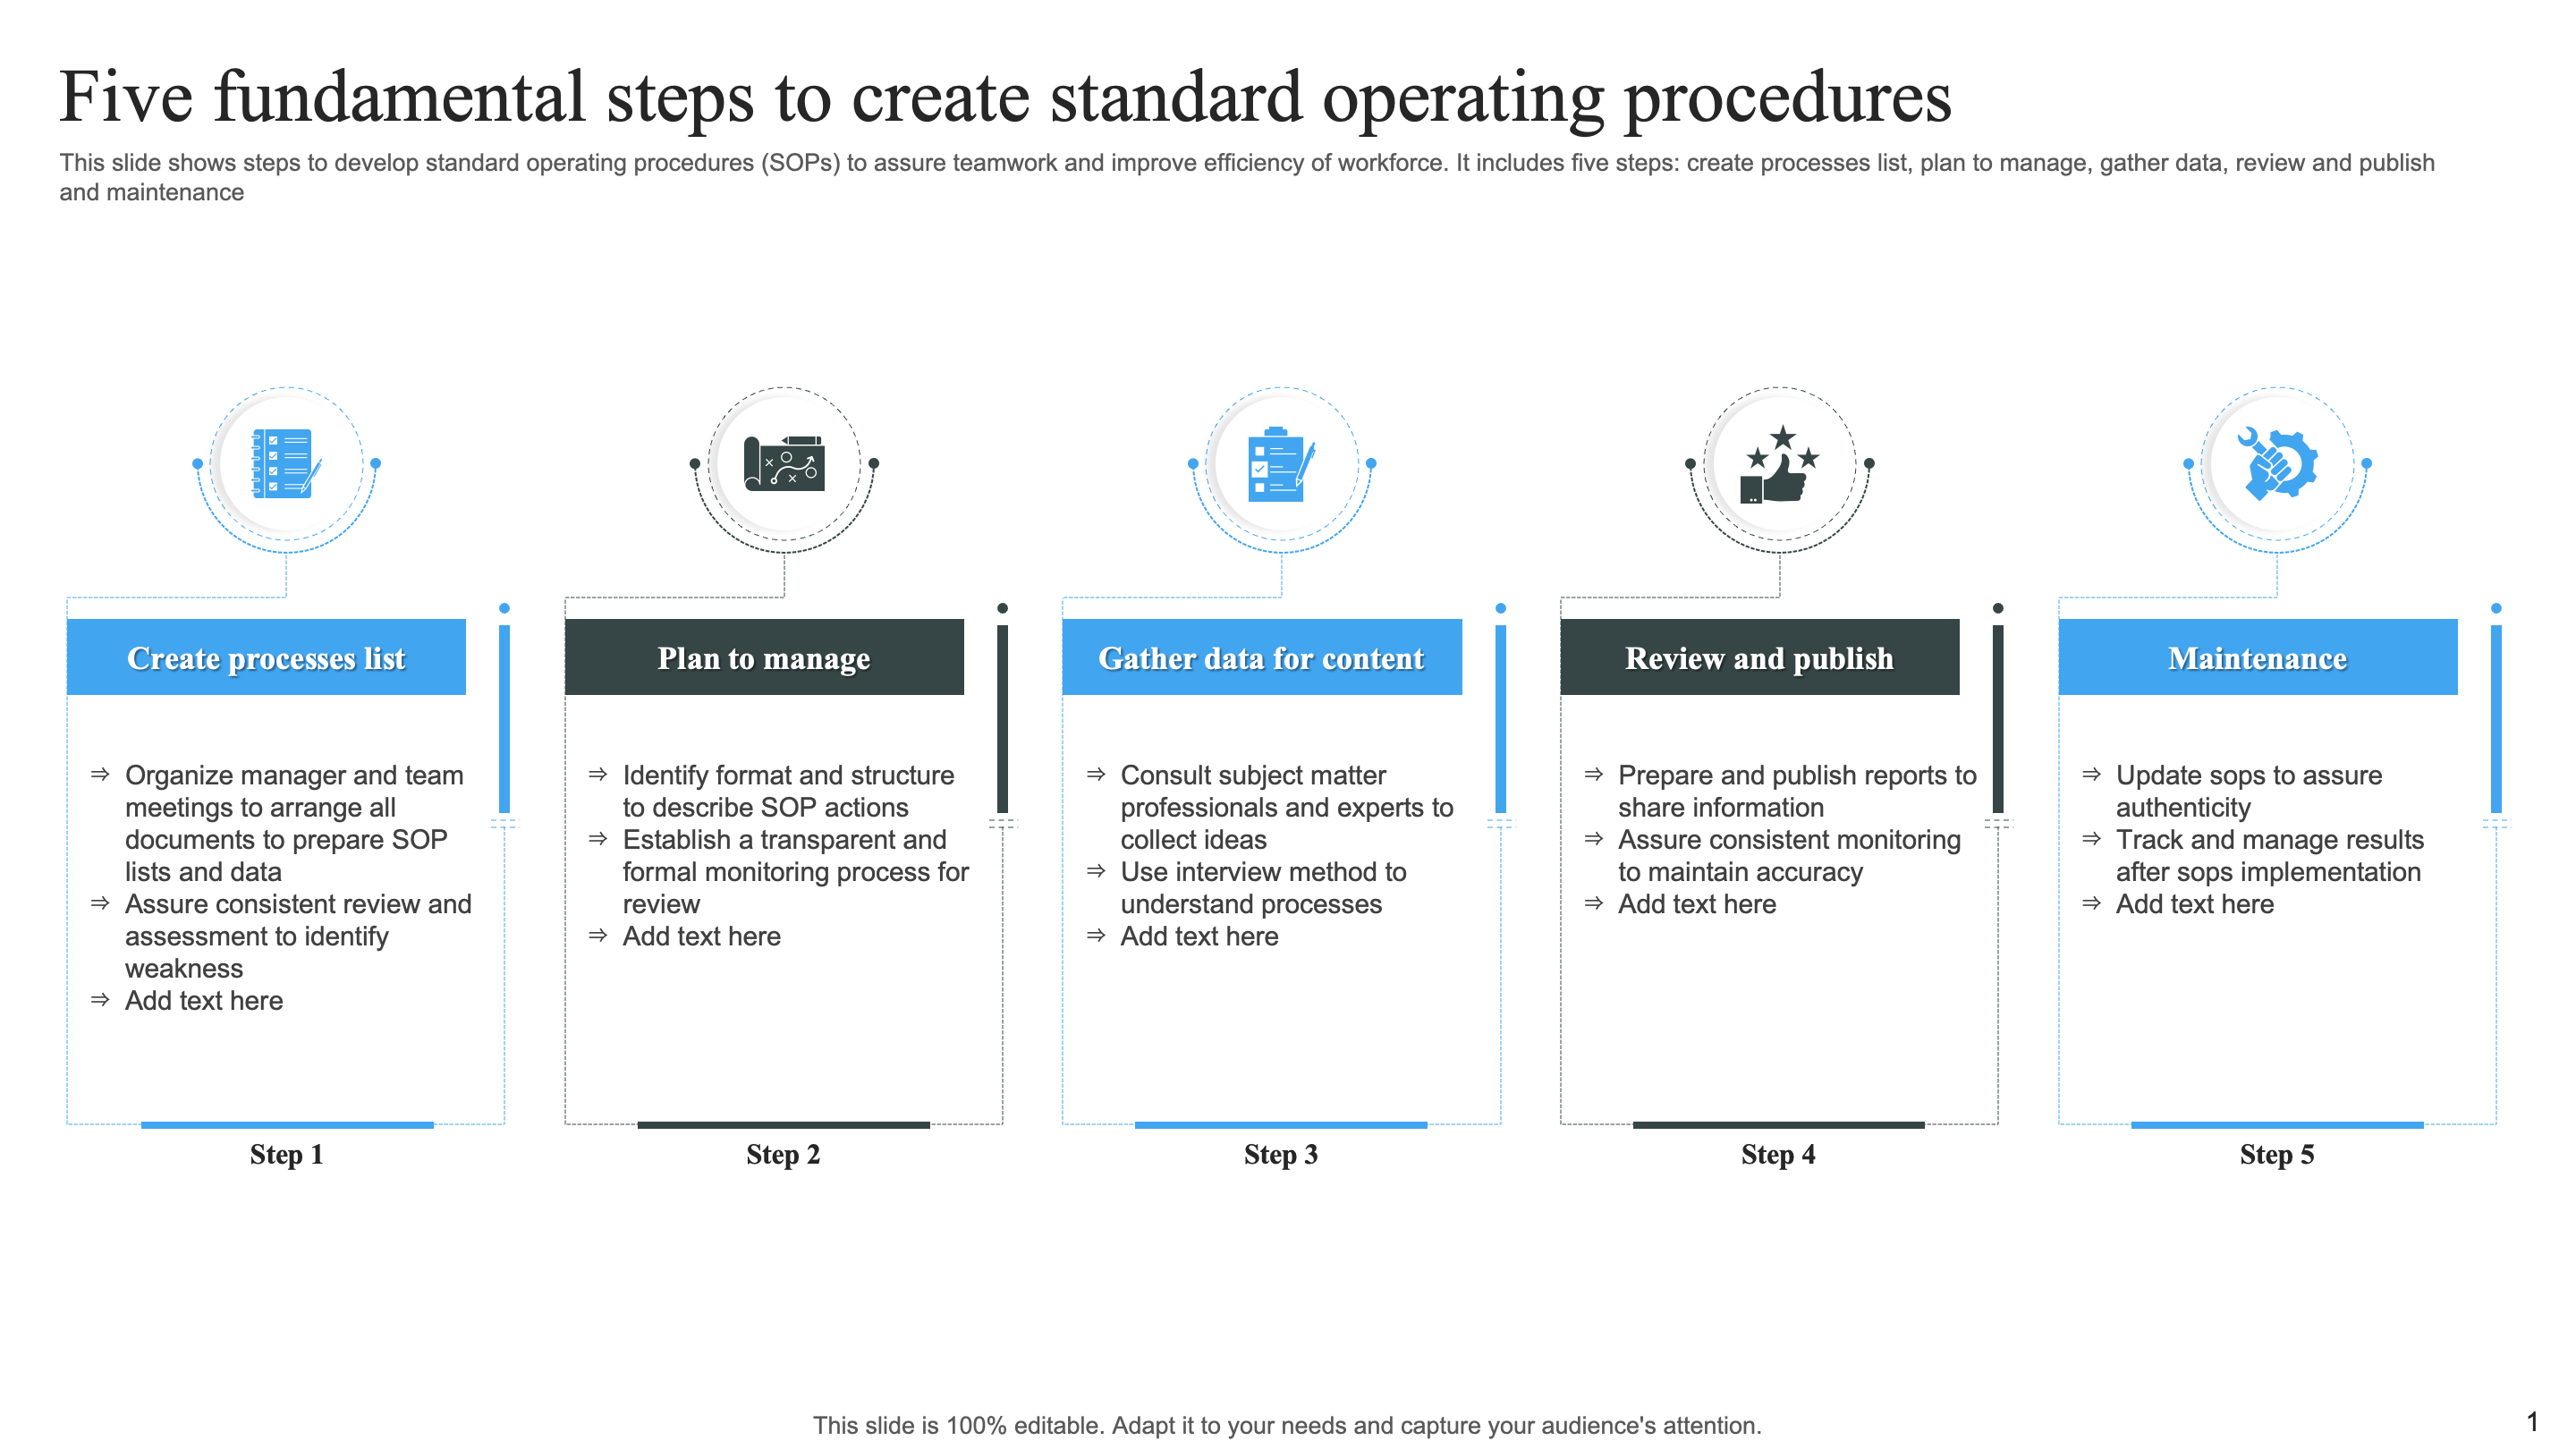 Five Fundamental Steps to Create SOP (Standard Operating Procedures)